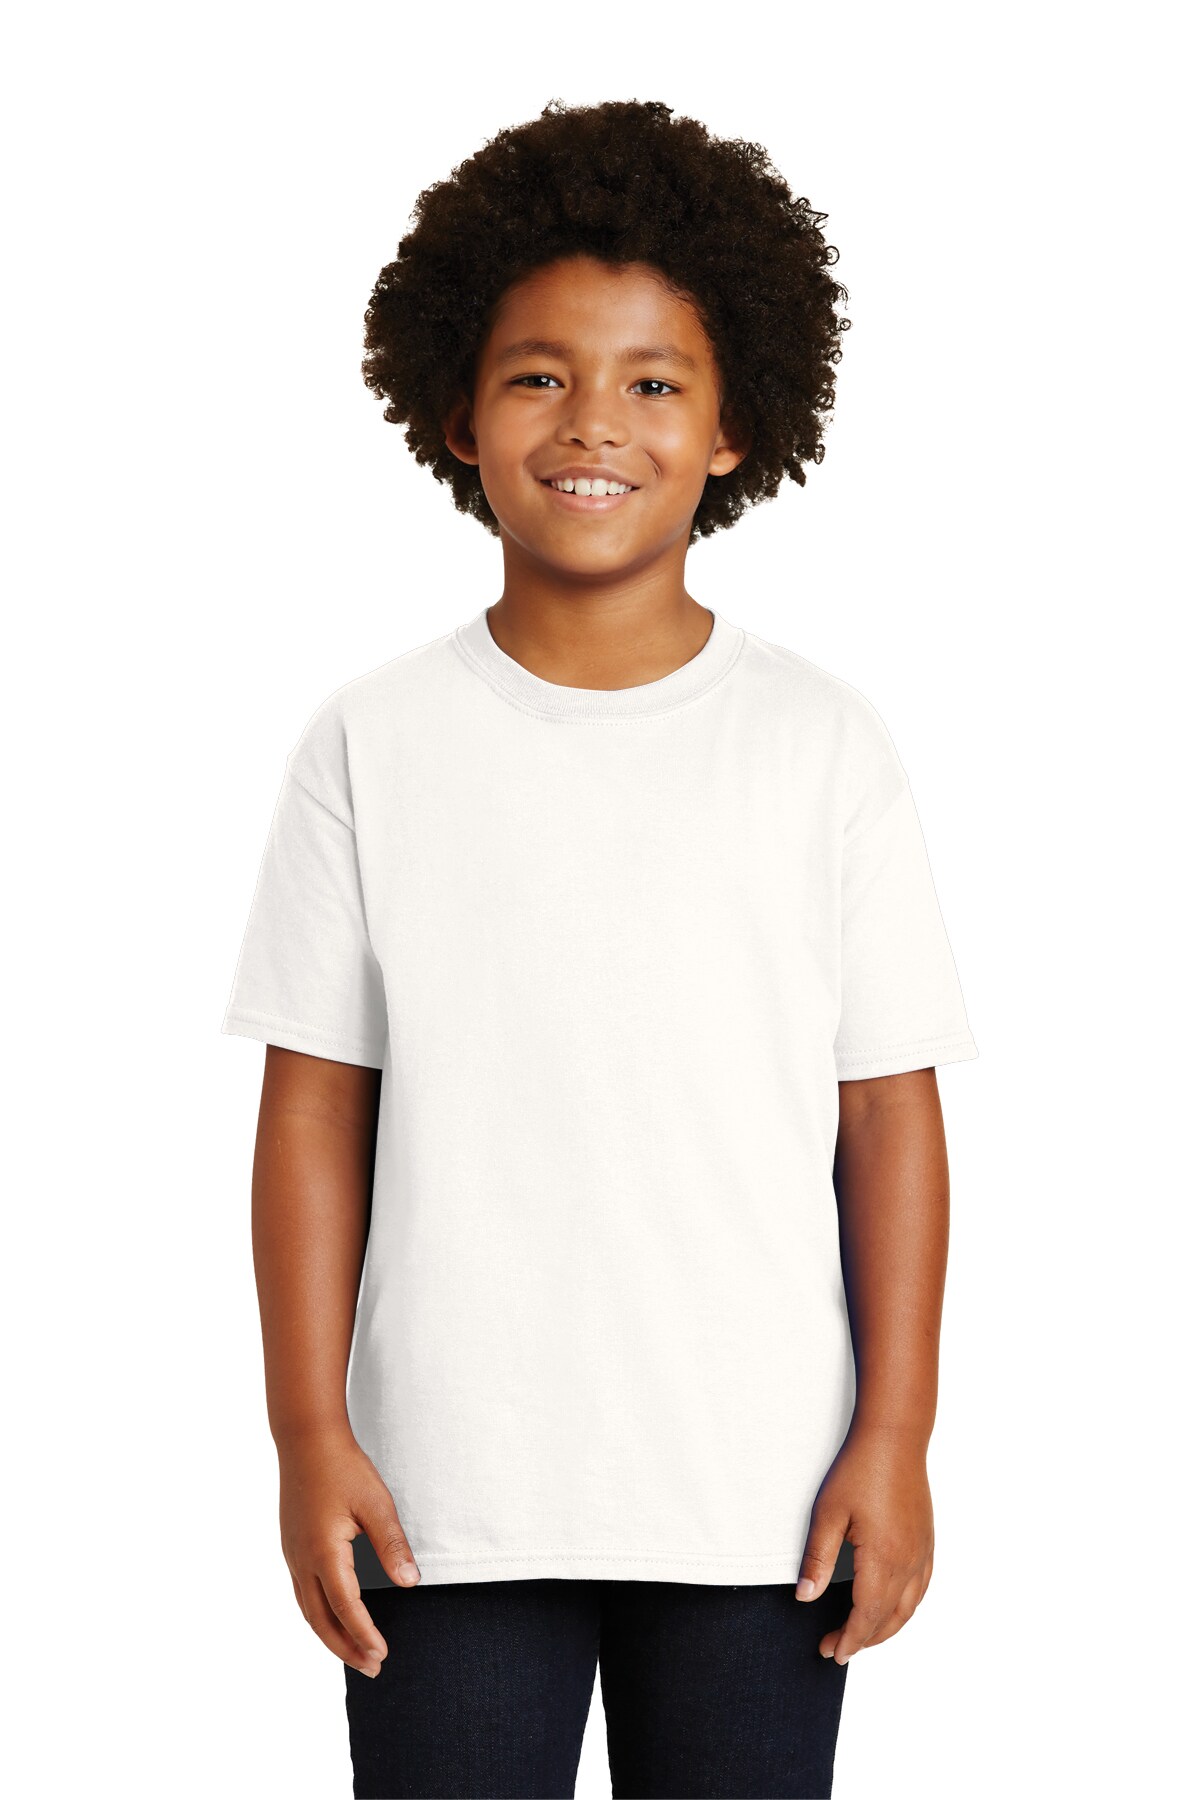 Stylish Premium T-shirt for Kids | RADYAN®